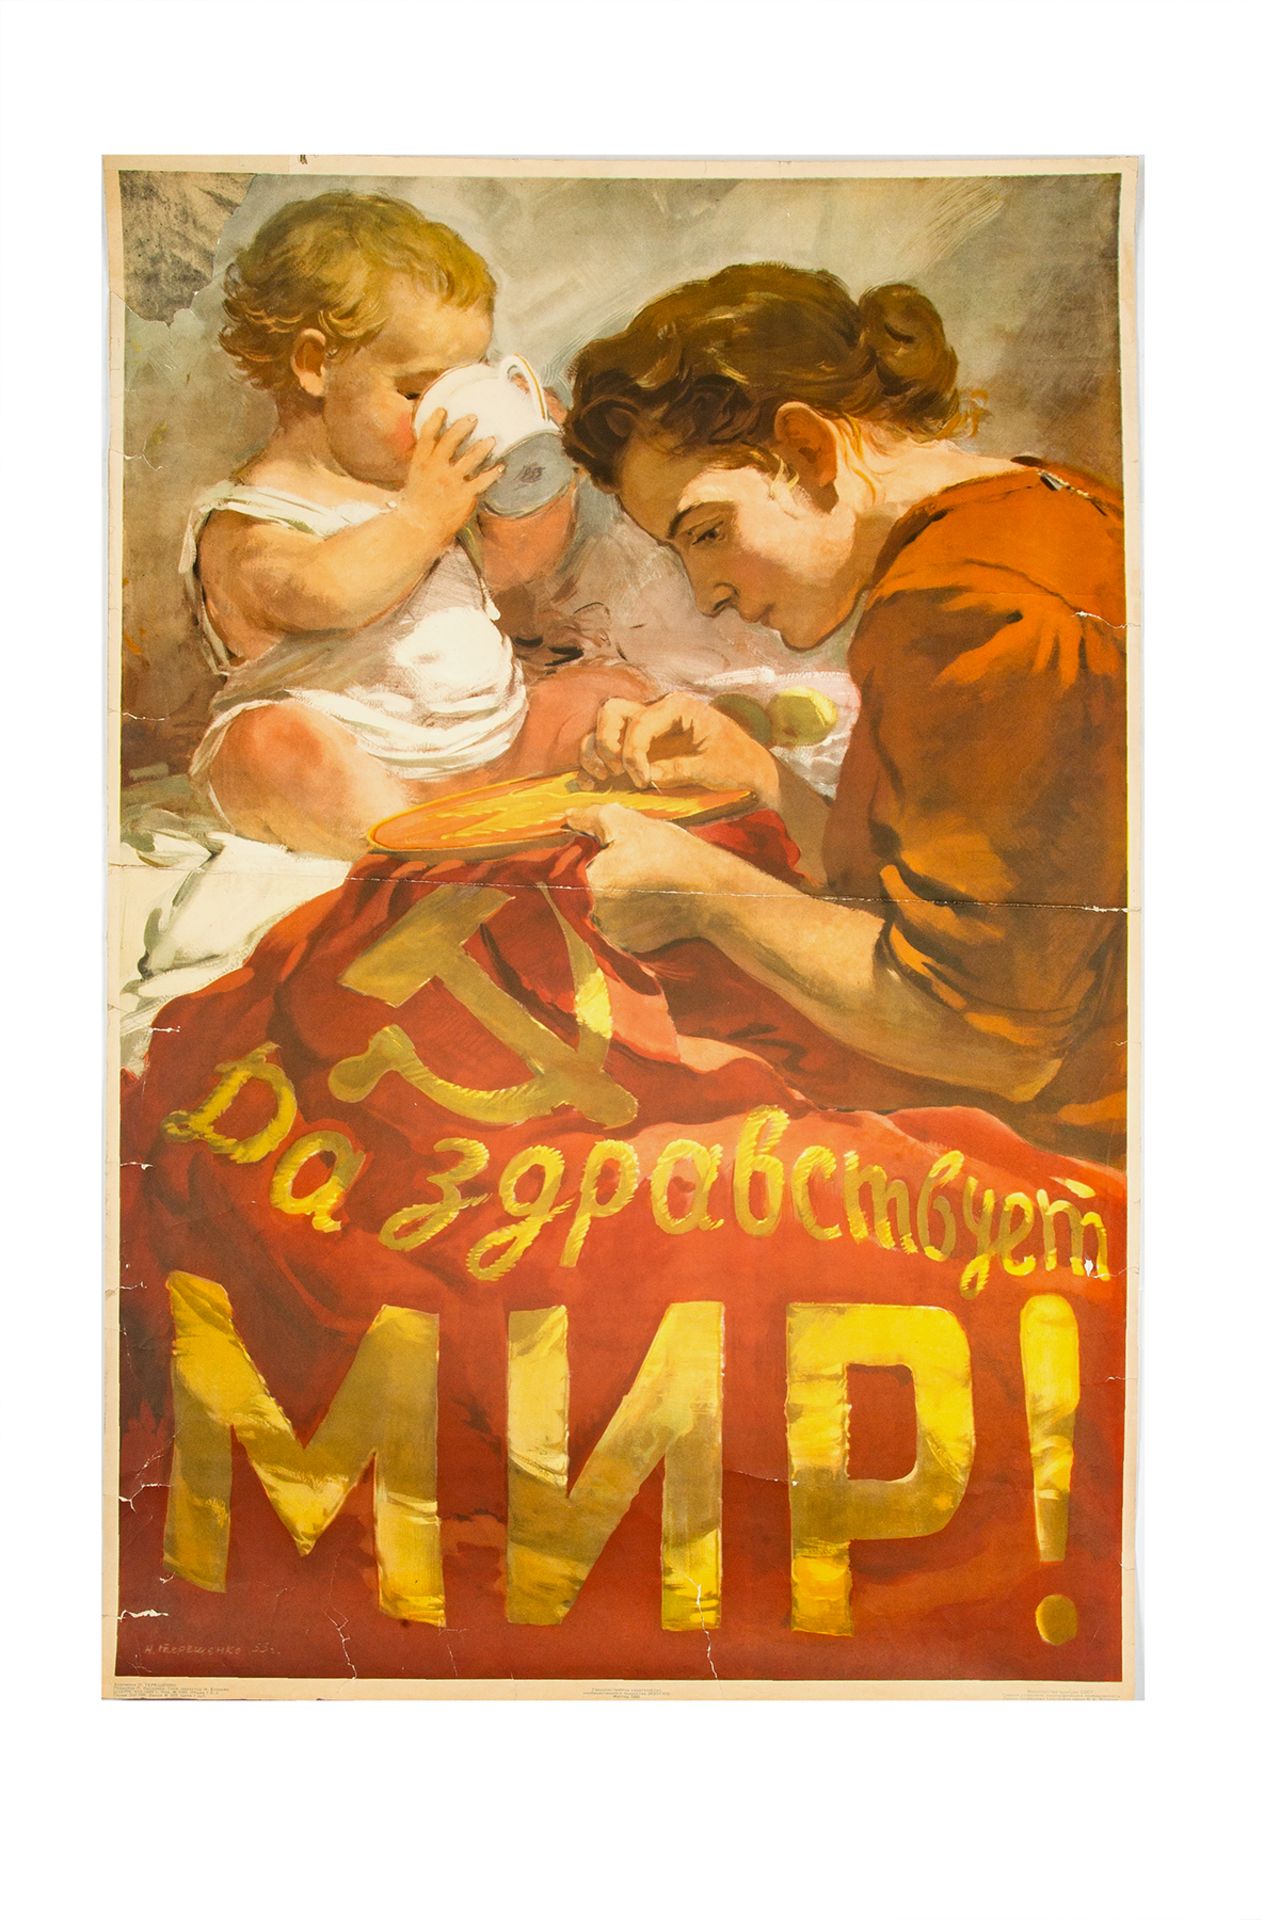 [Soviet] Tereschenko, N.I. Poster â€œDa zdravstvuet mir!â€ (Peace forever). â€“ Moscow.: IZOGIZ, 19